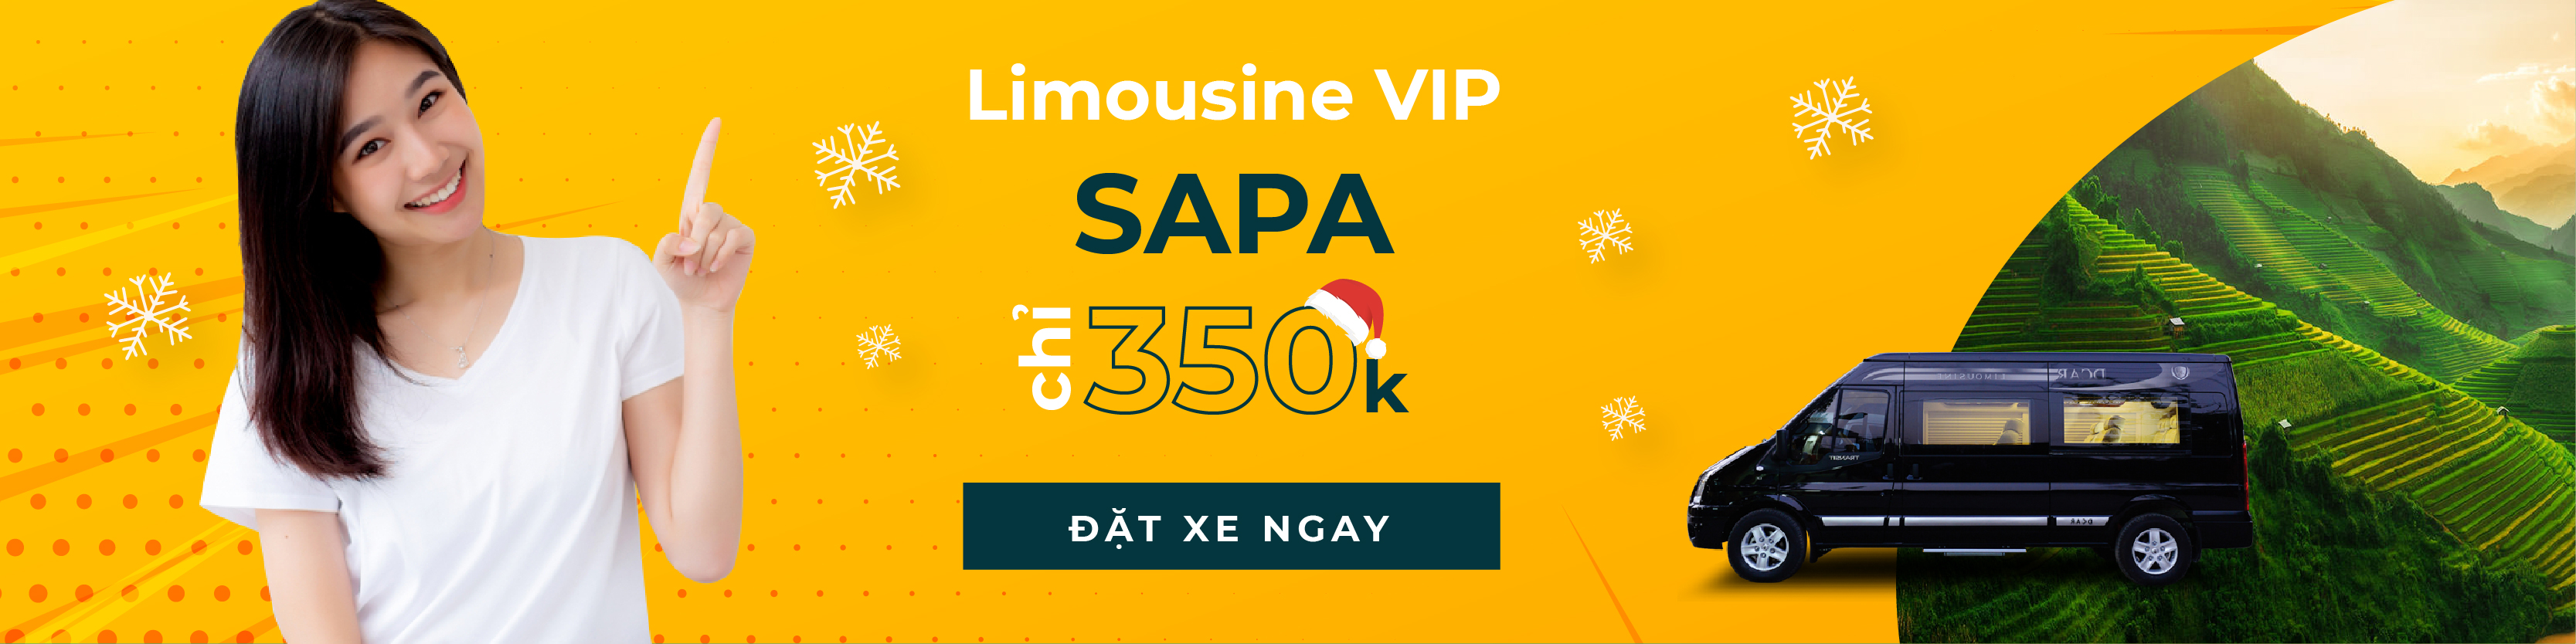 Limousine Hà Nội Sapa